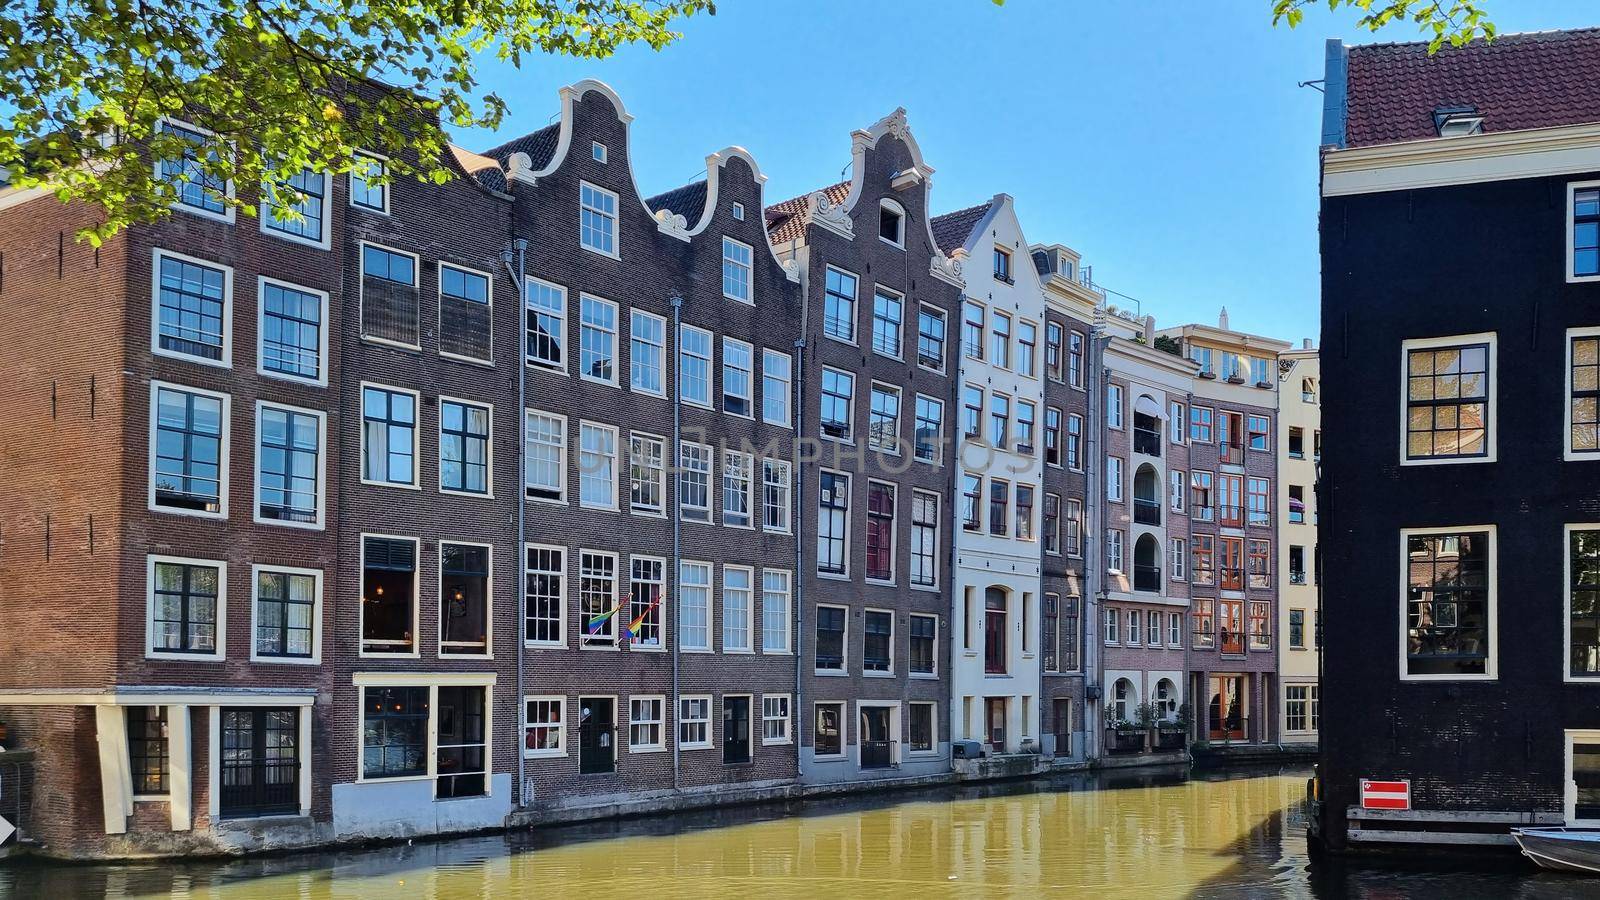 Channel in Amsterdam Netherlands. Houses river Amstel landmark. Old European city summer landscape by anytka